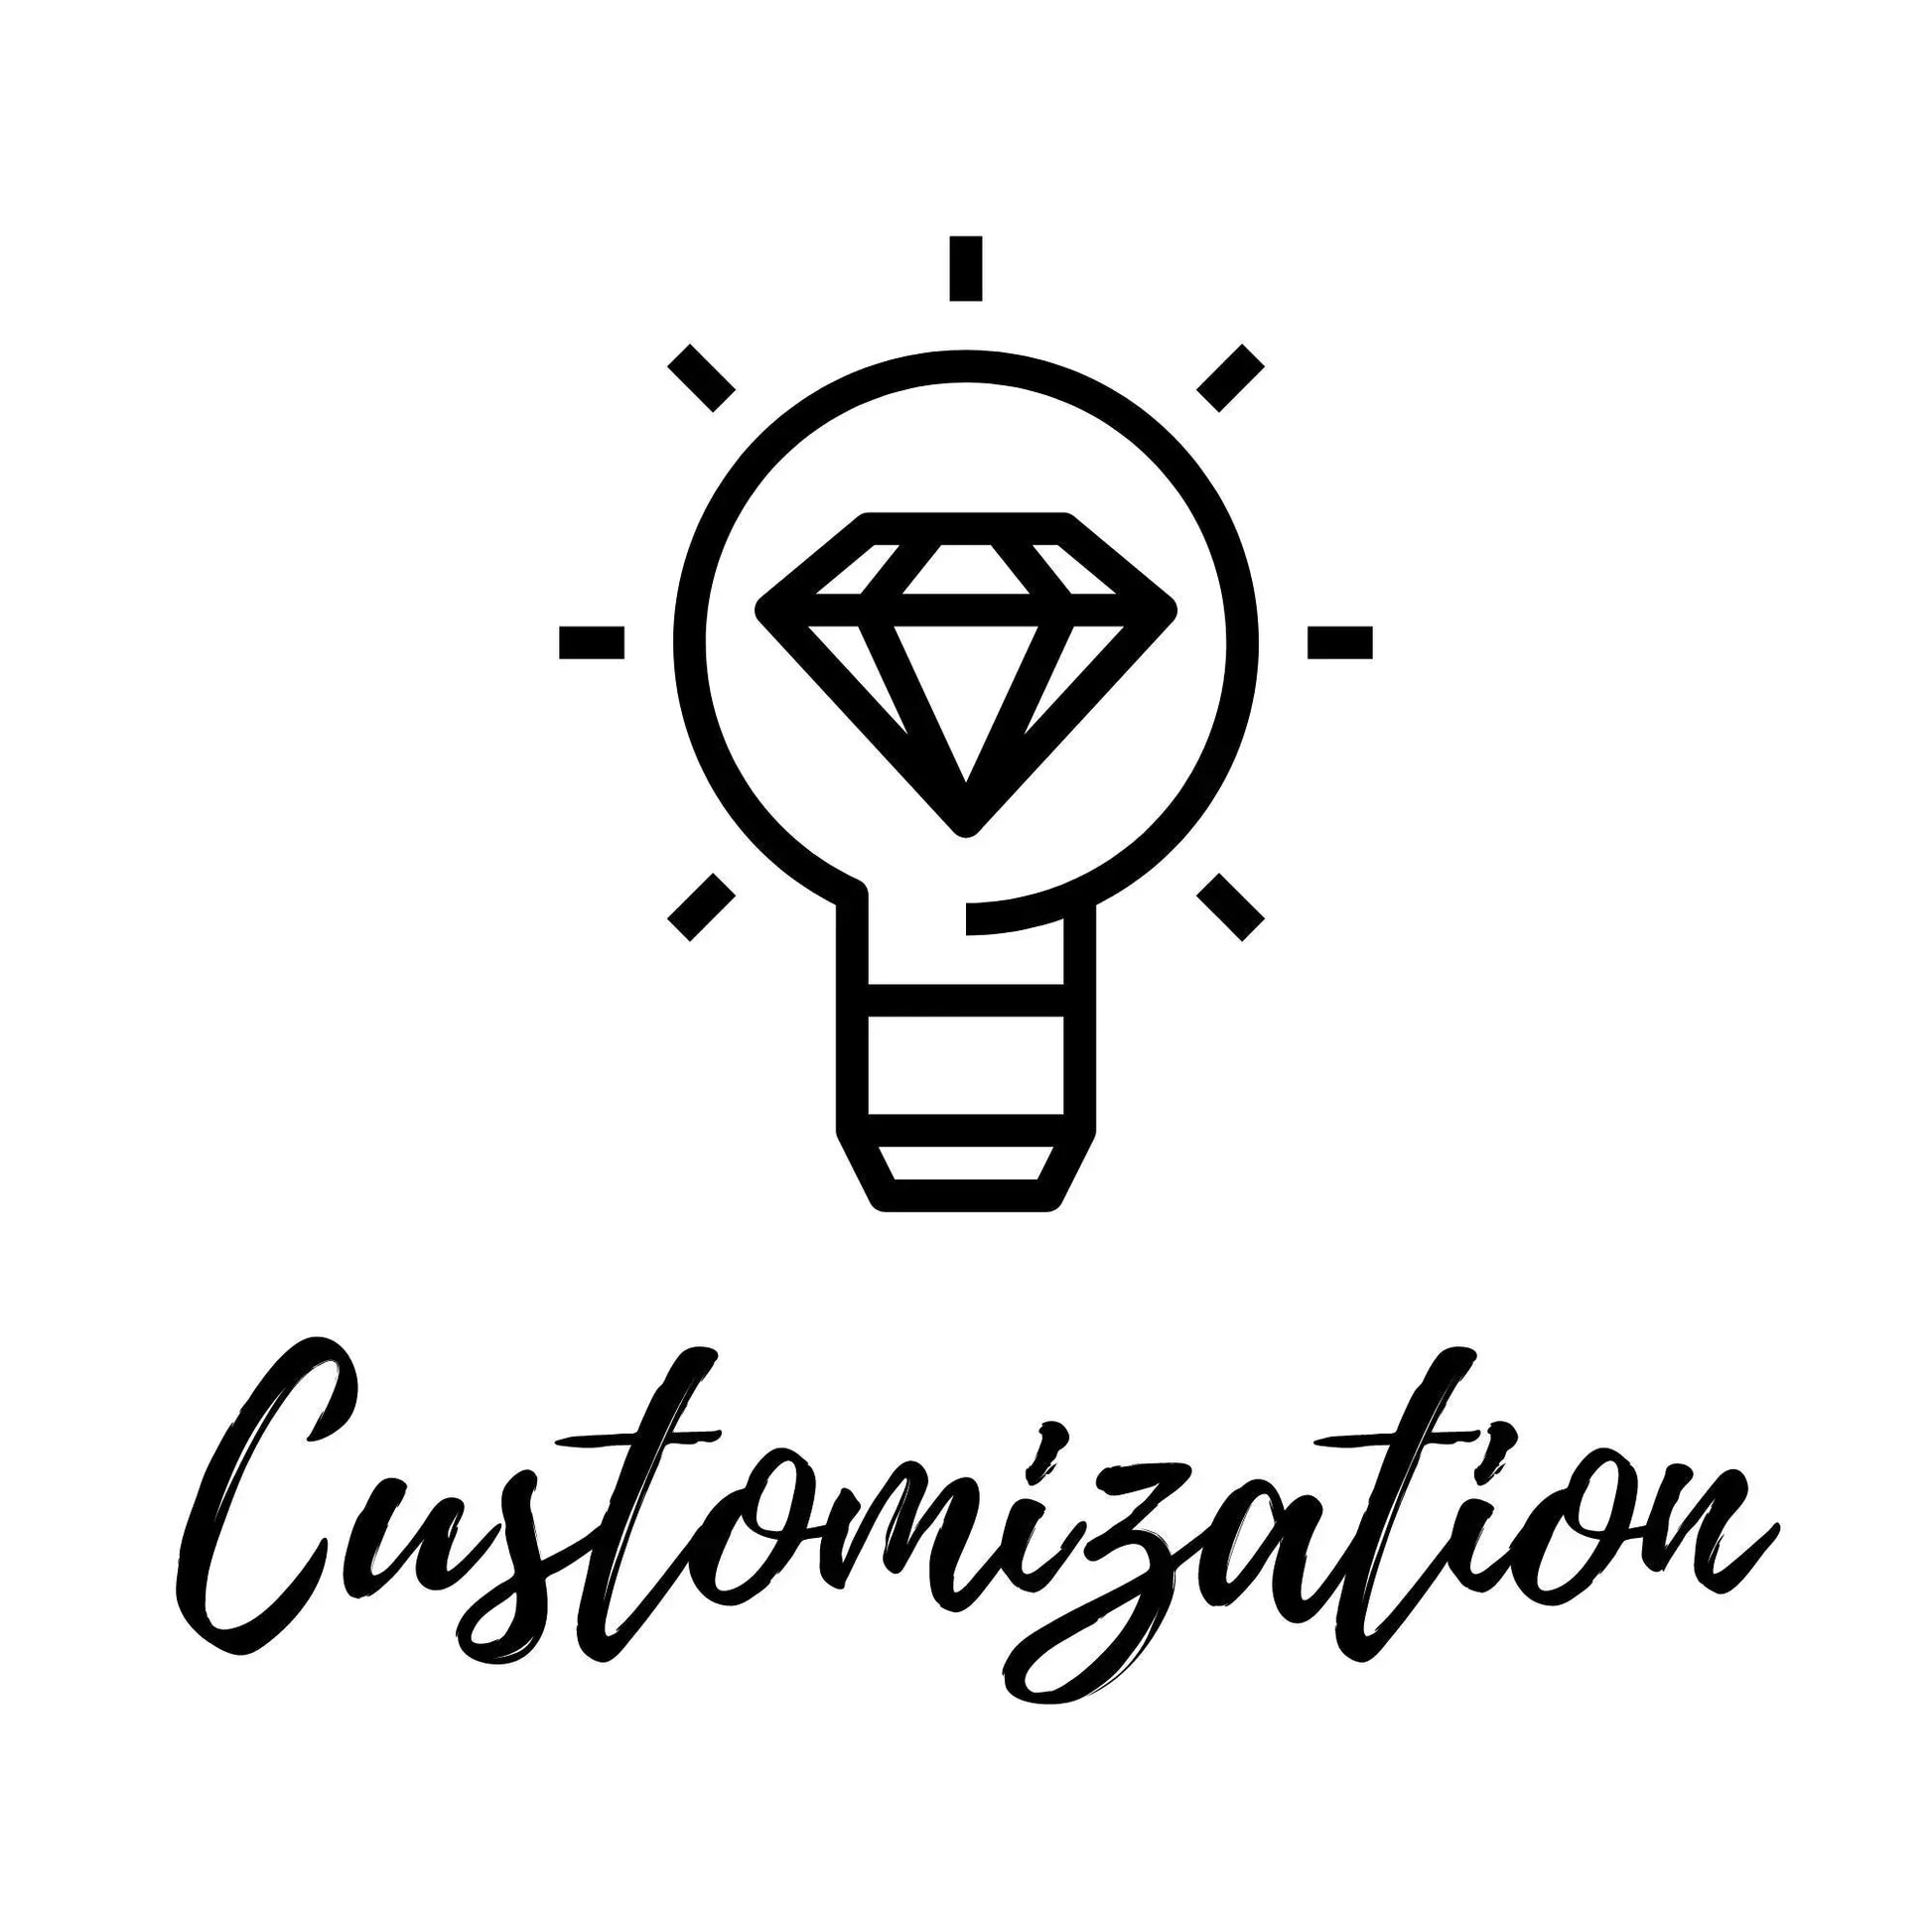 Customization Requests, Back Designs, Etc.